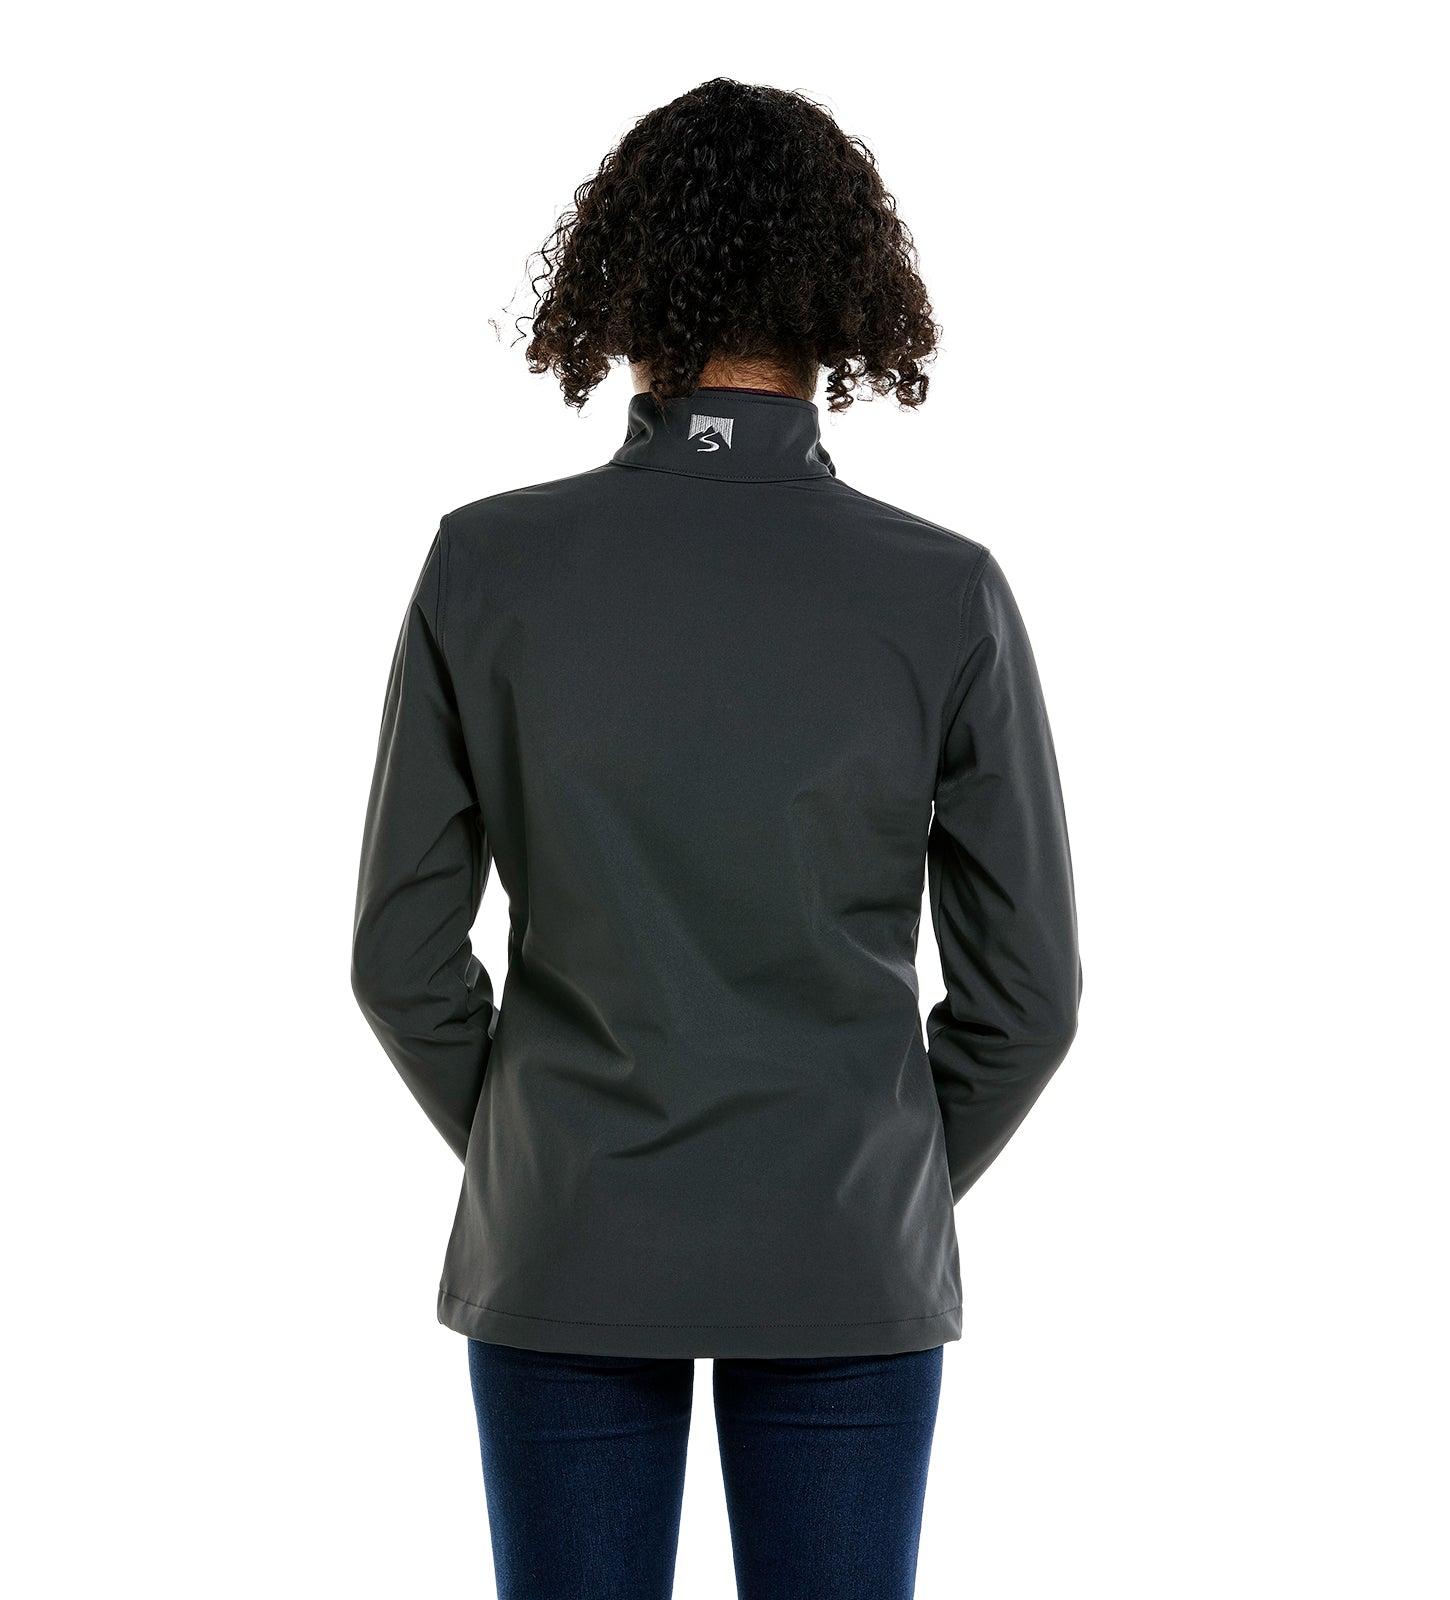 Customizable Storm Creek® Women's Trailblazer Jacket